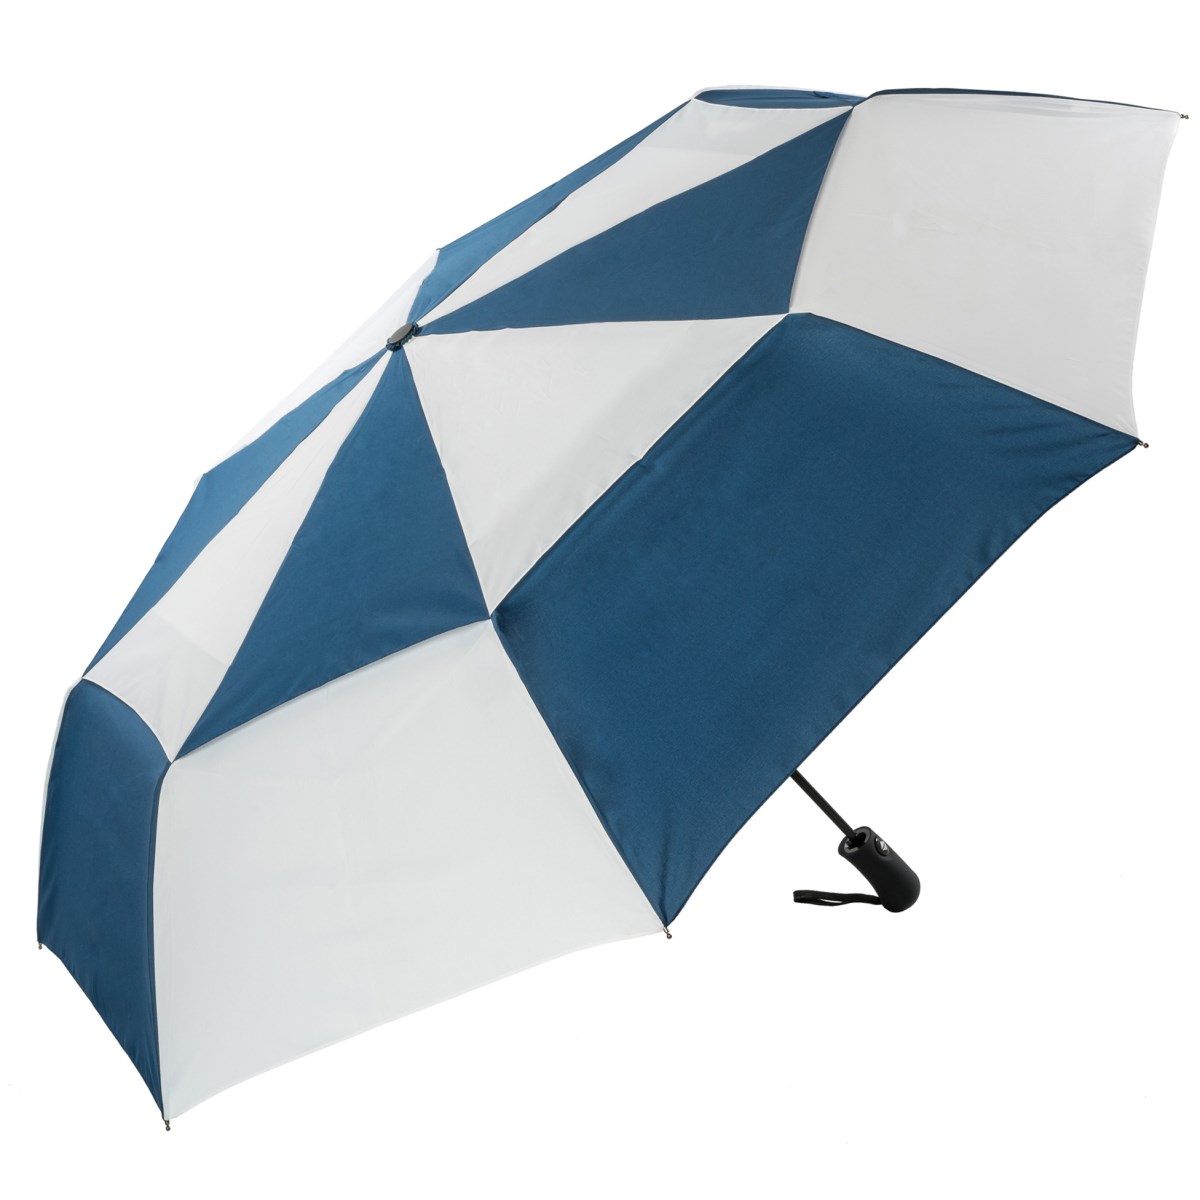 Navy and white folding golf umbrella.